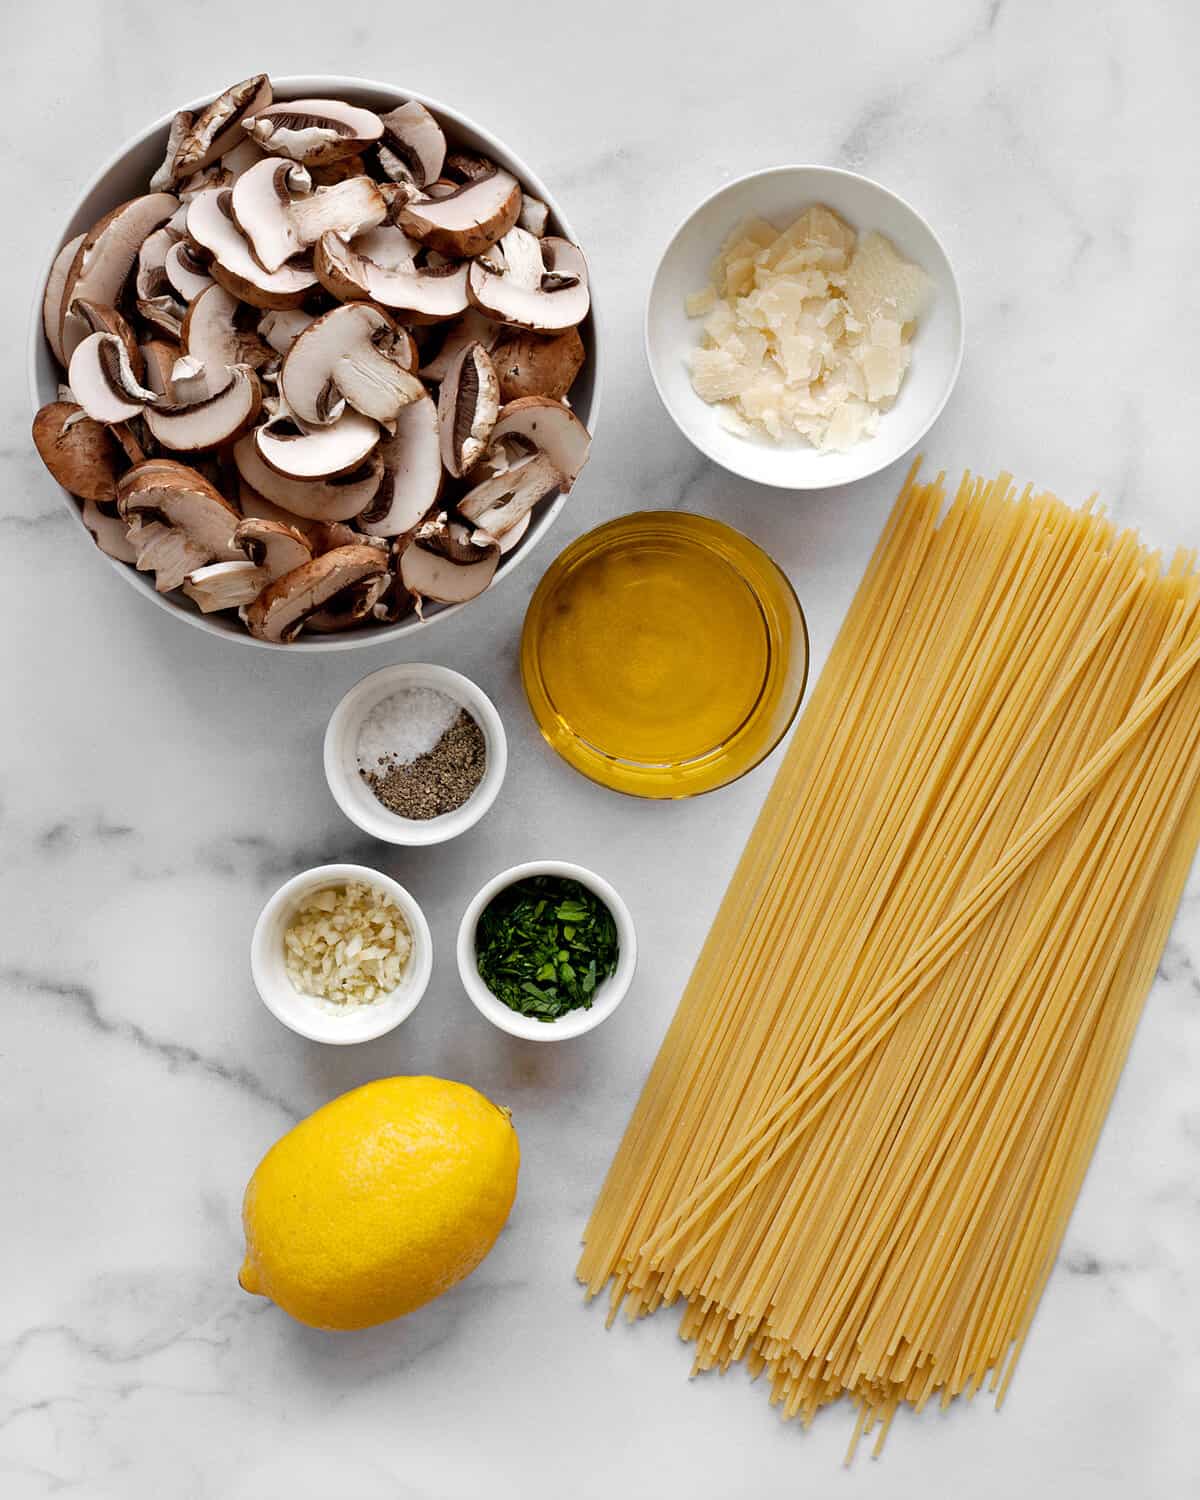 Ingredients including mushrooms, spaghetti, lemon, garlic, olive oil, lemon juice and parmesan.